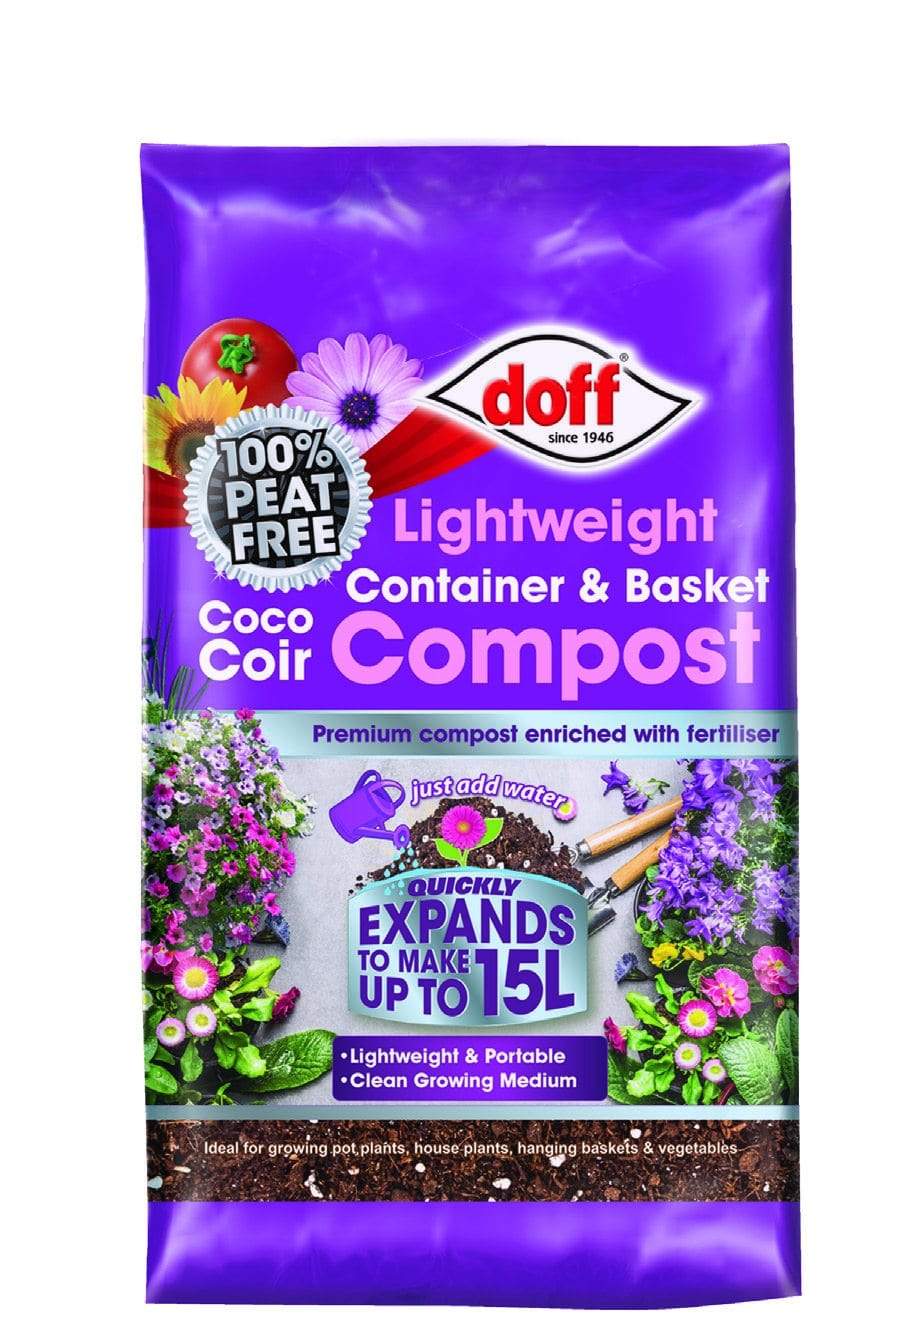 Doff Compost Doff Lightweight Container & Basket Compost